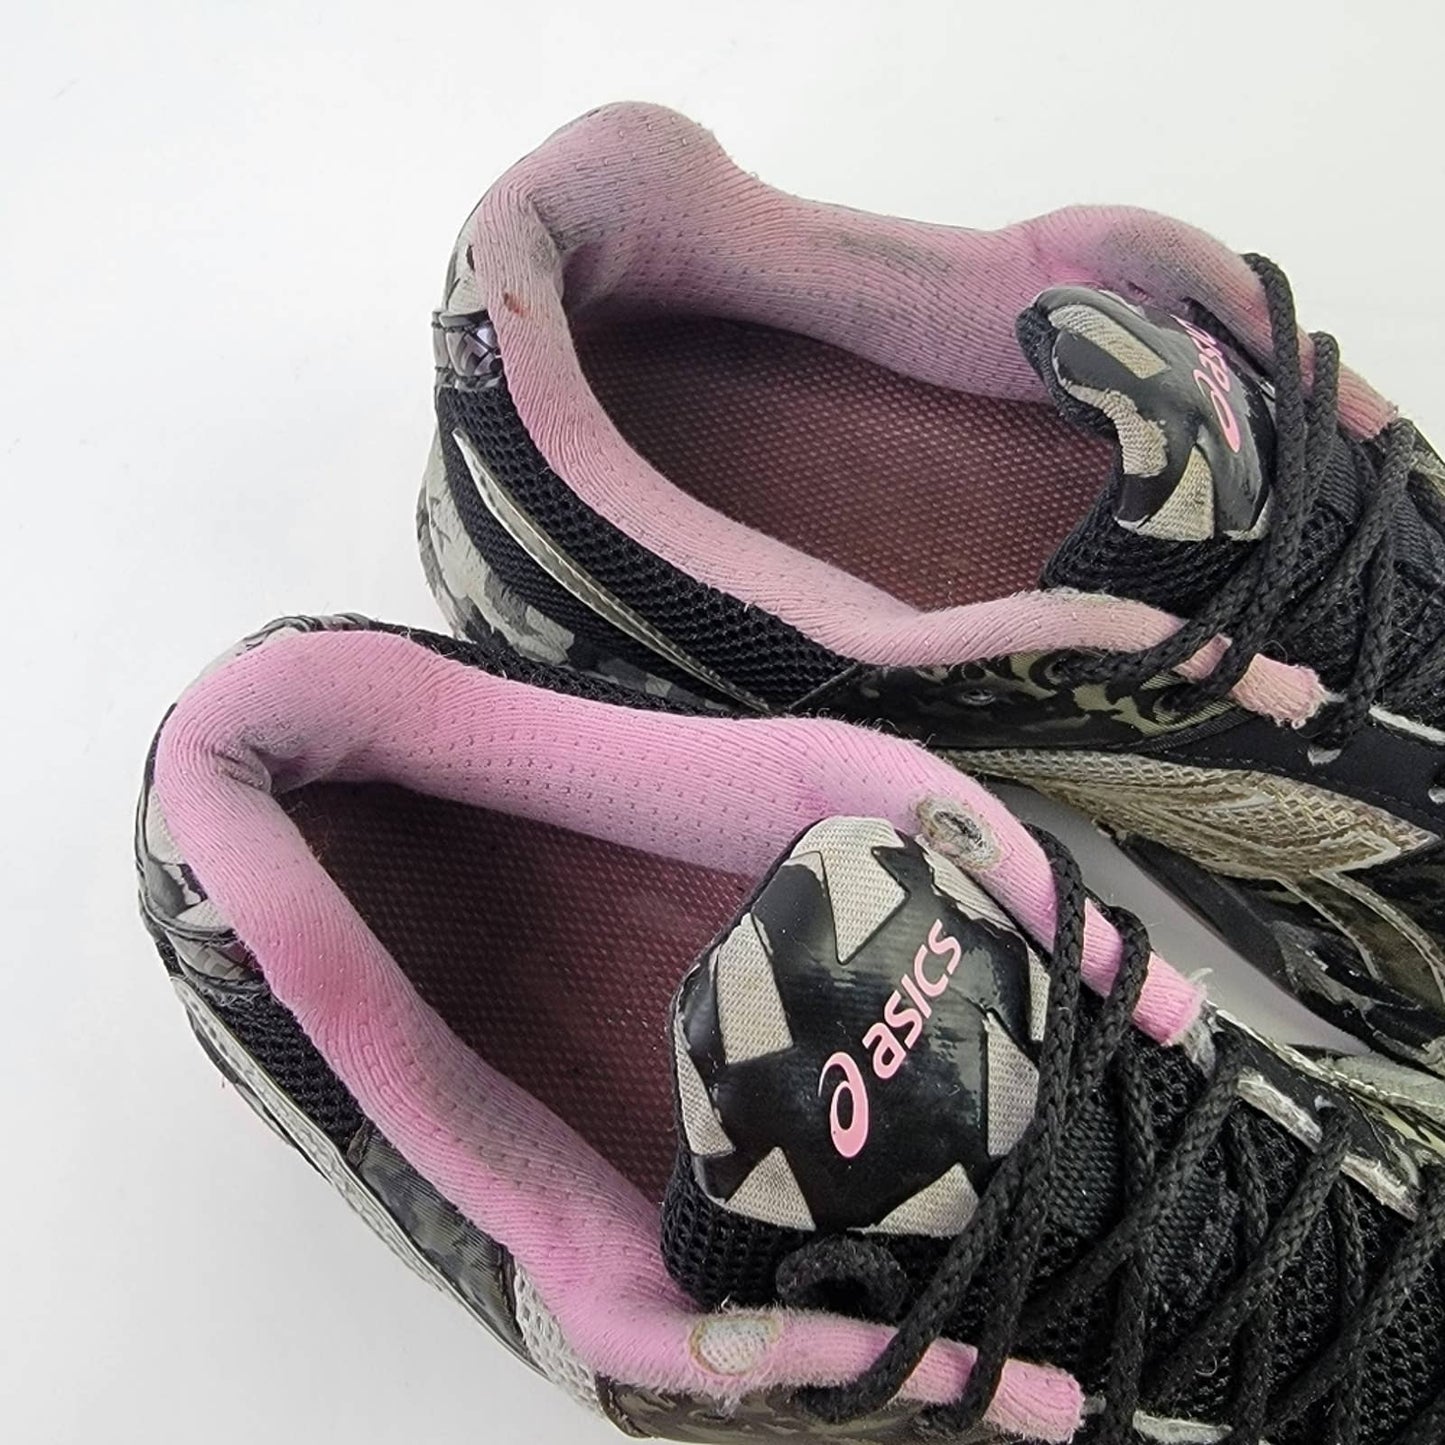 Asics Gel Noosa Tri 8 Black Camo Running Shoes - 8.5